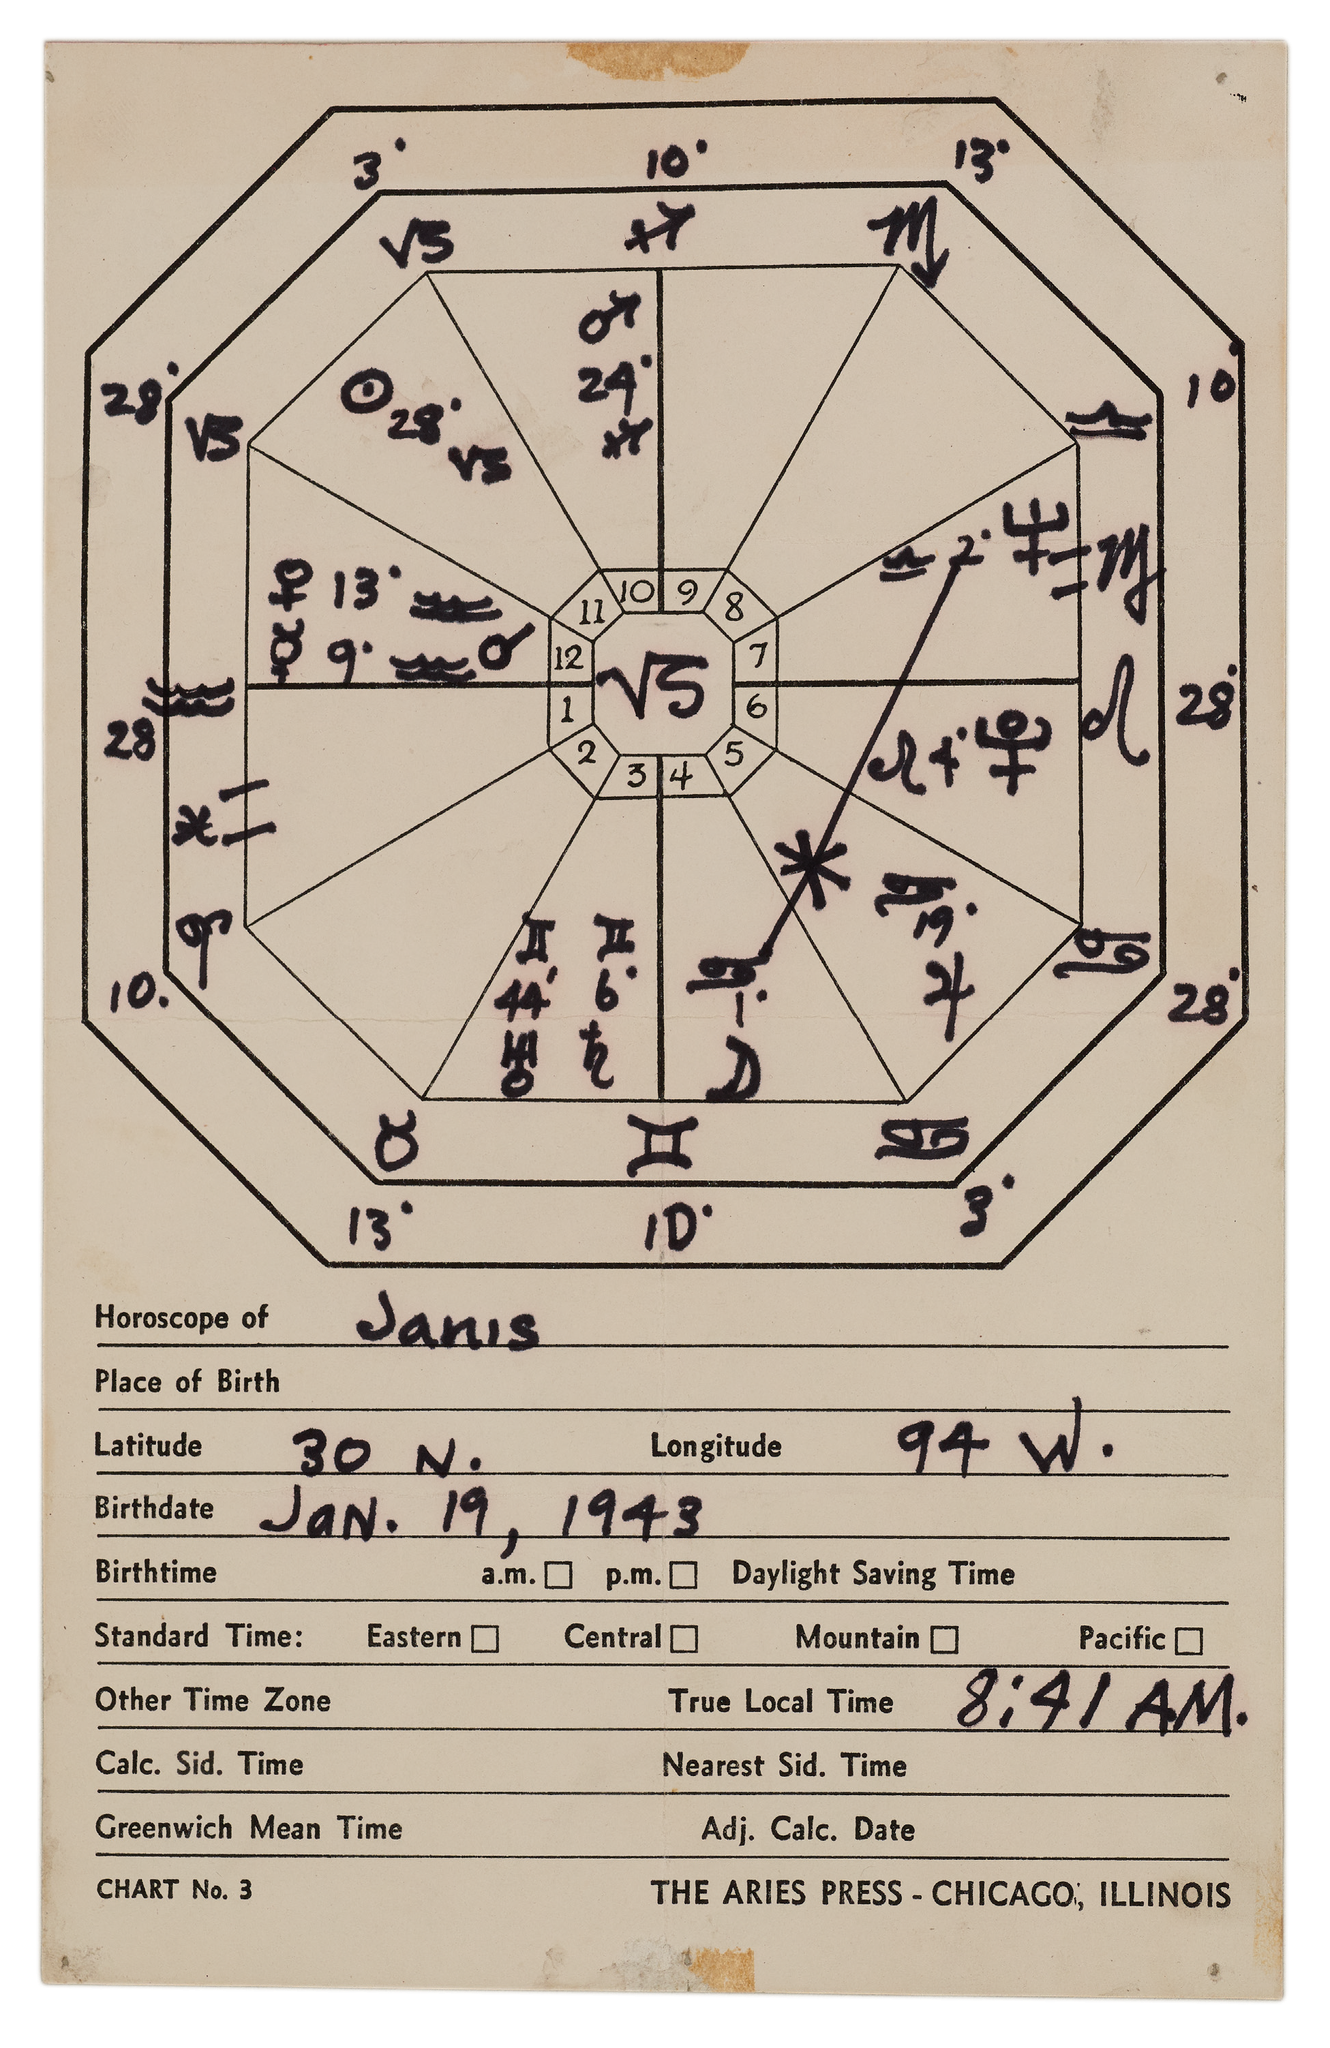 Janis Joplin horoscope from the scrapbook